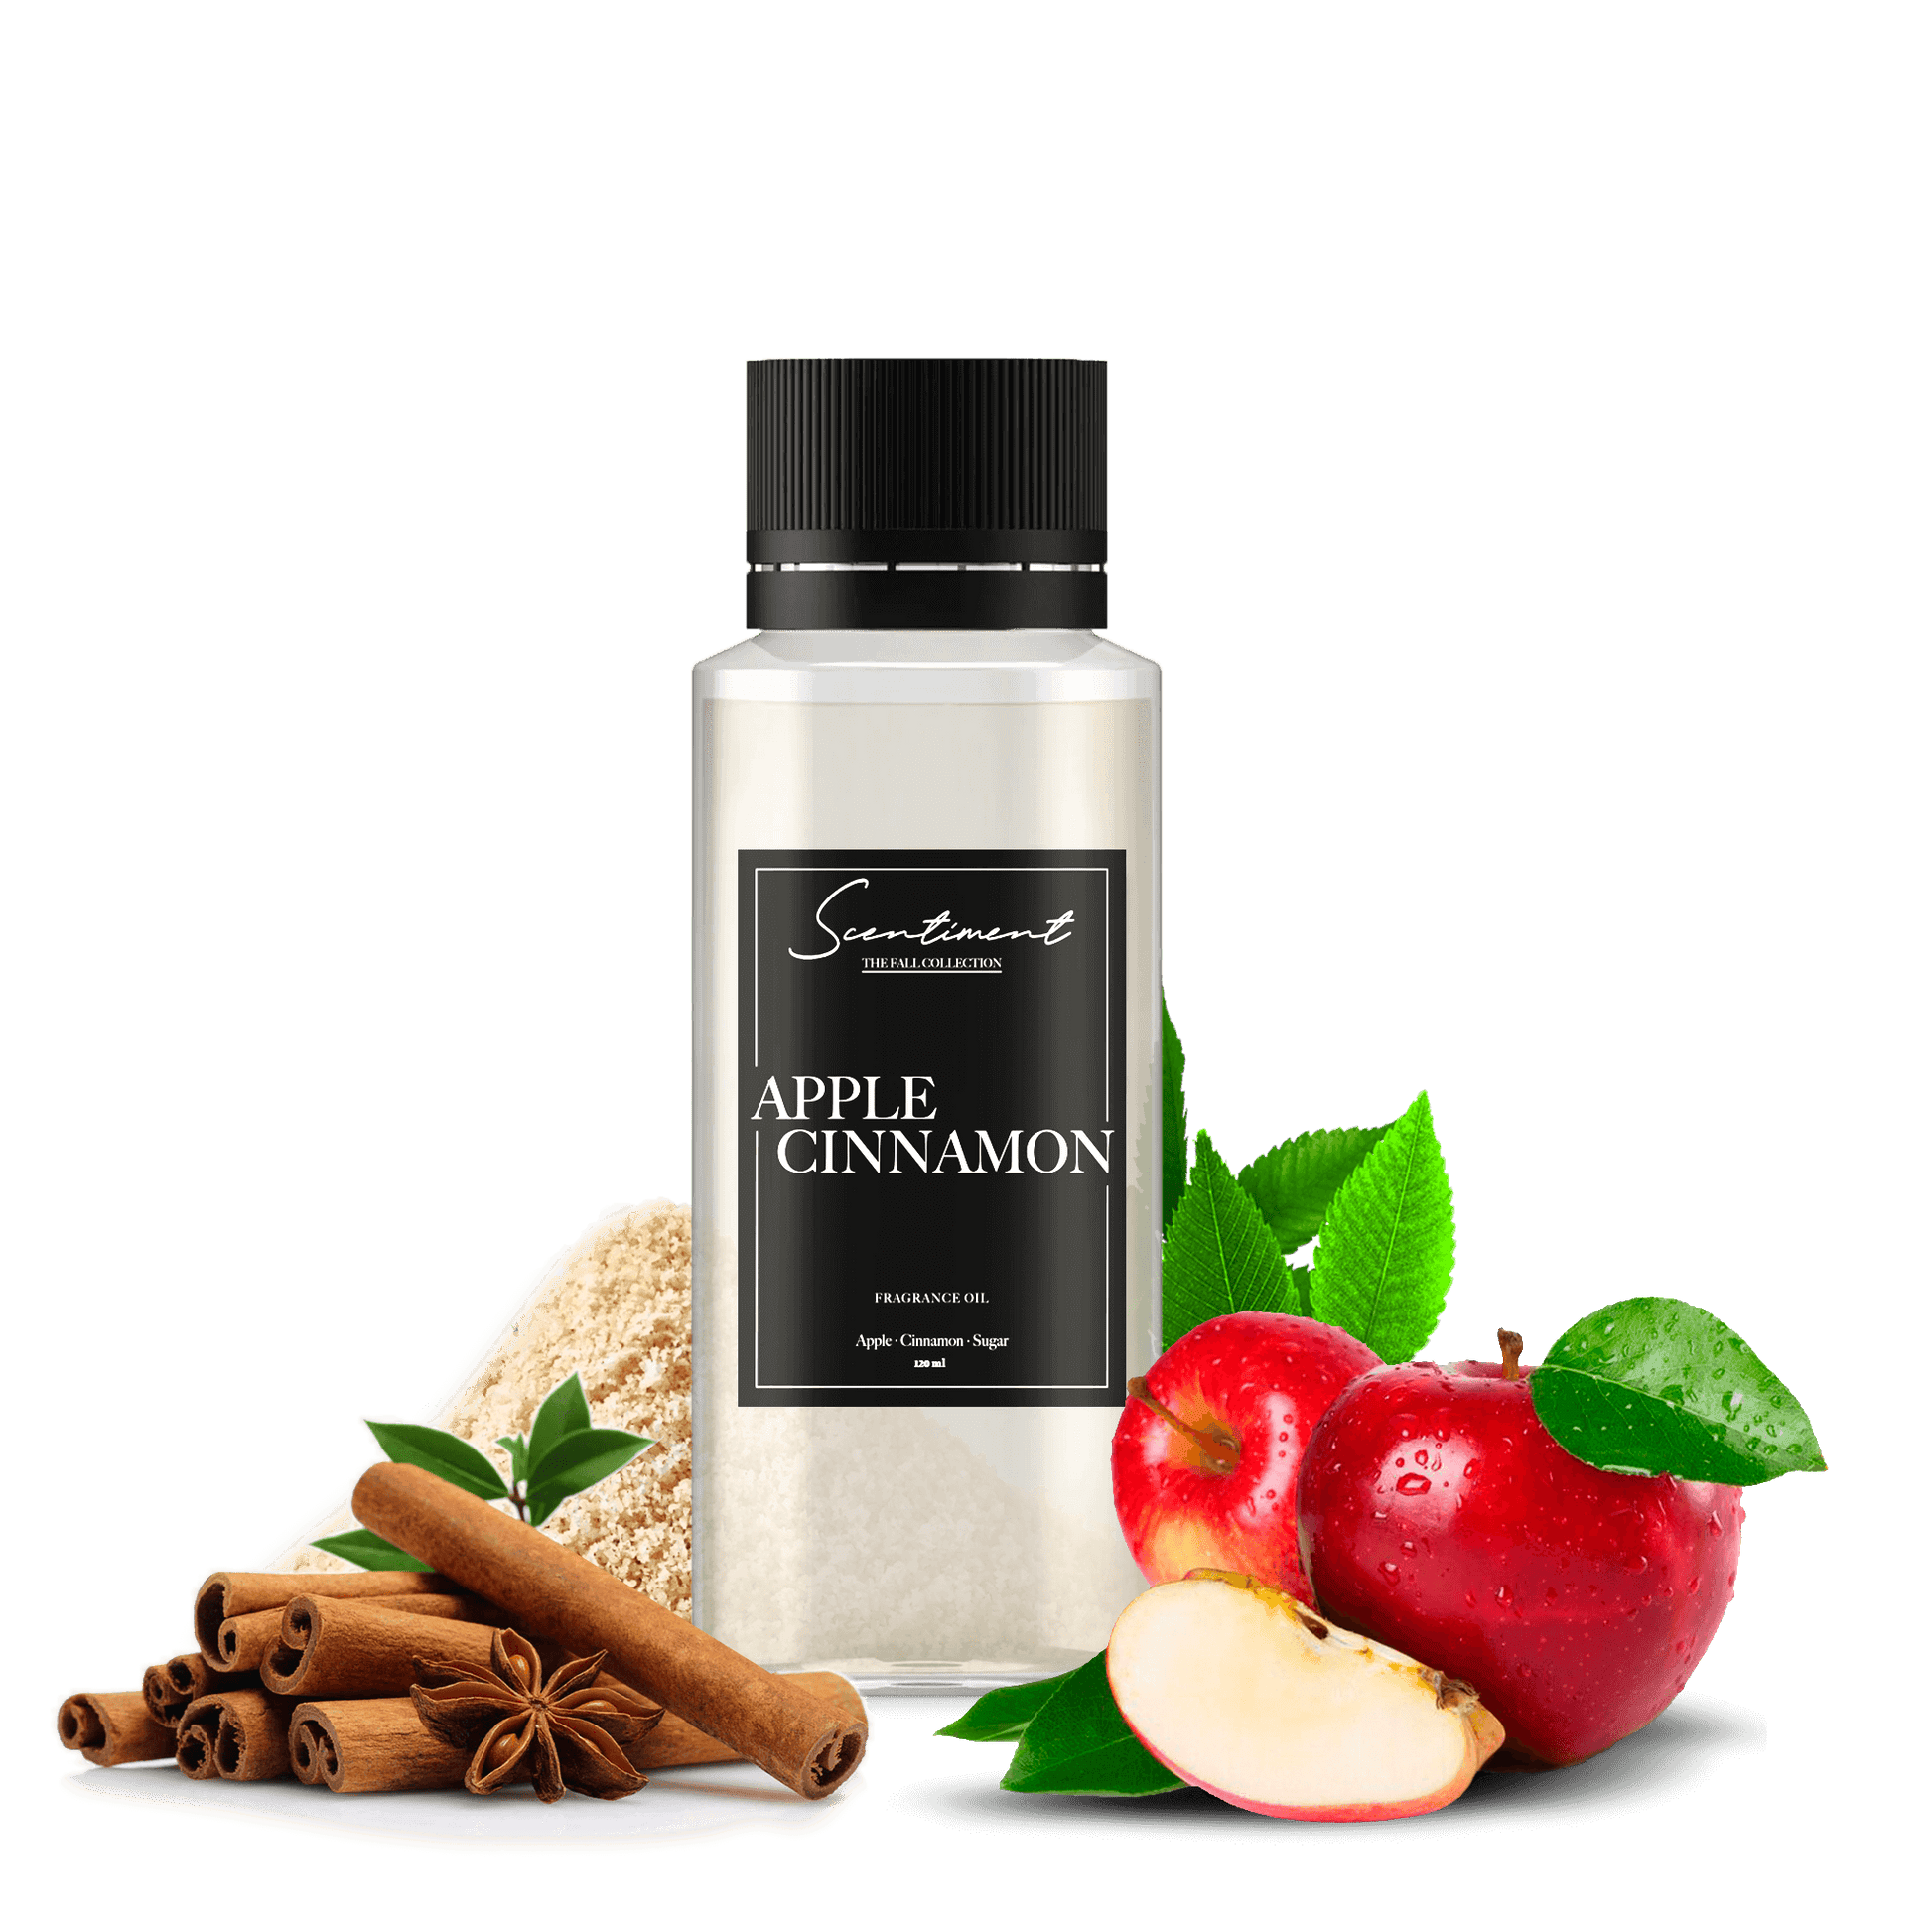 Apple Cinnamon Fragrance Oil with notes of Apple, Cinnamon, and Sugar.